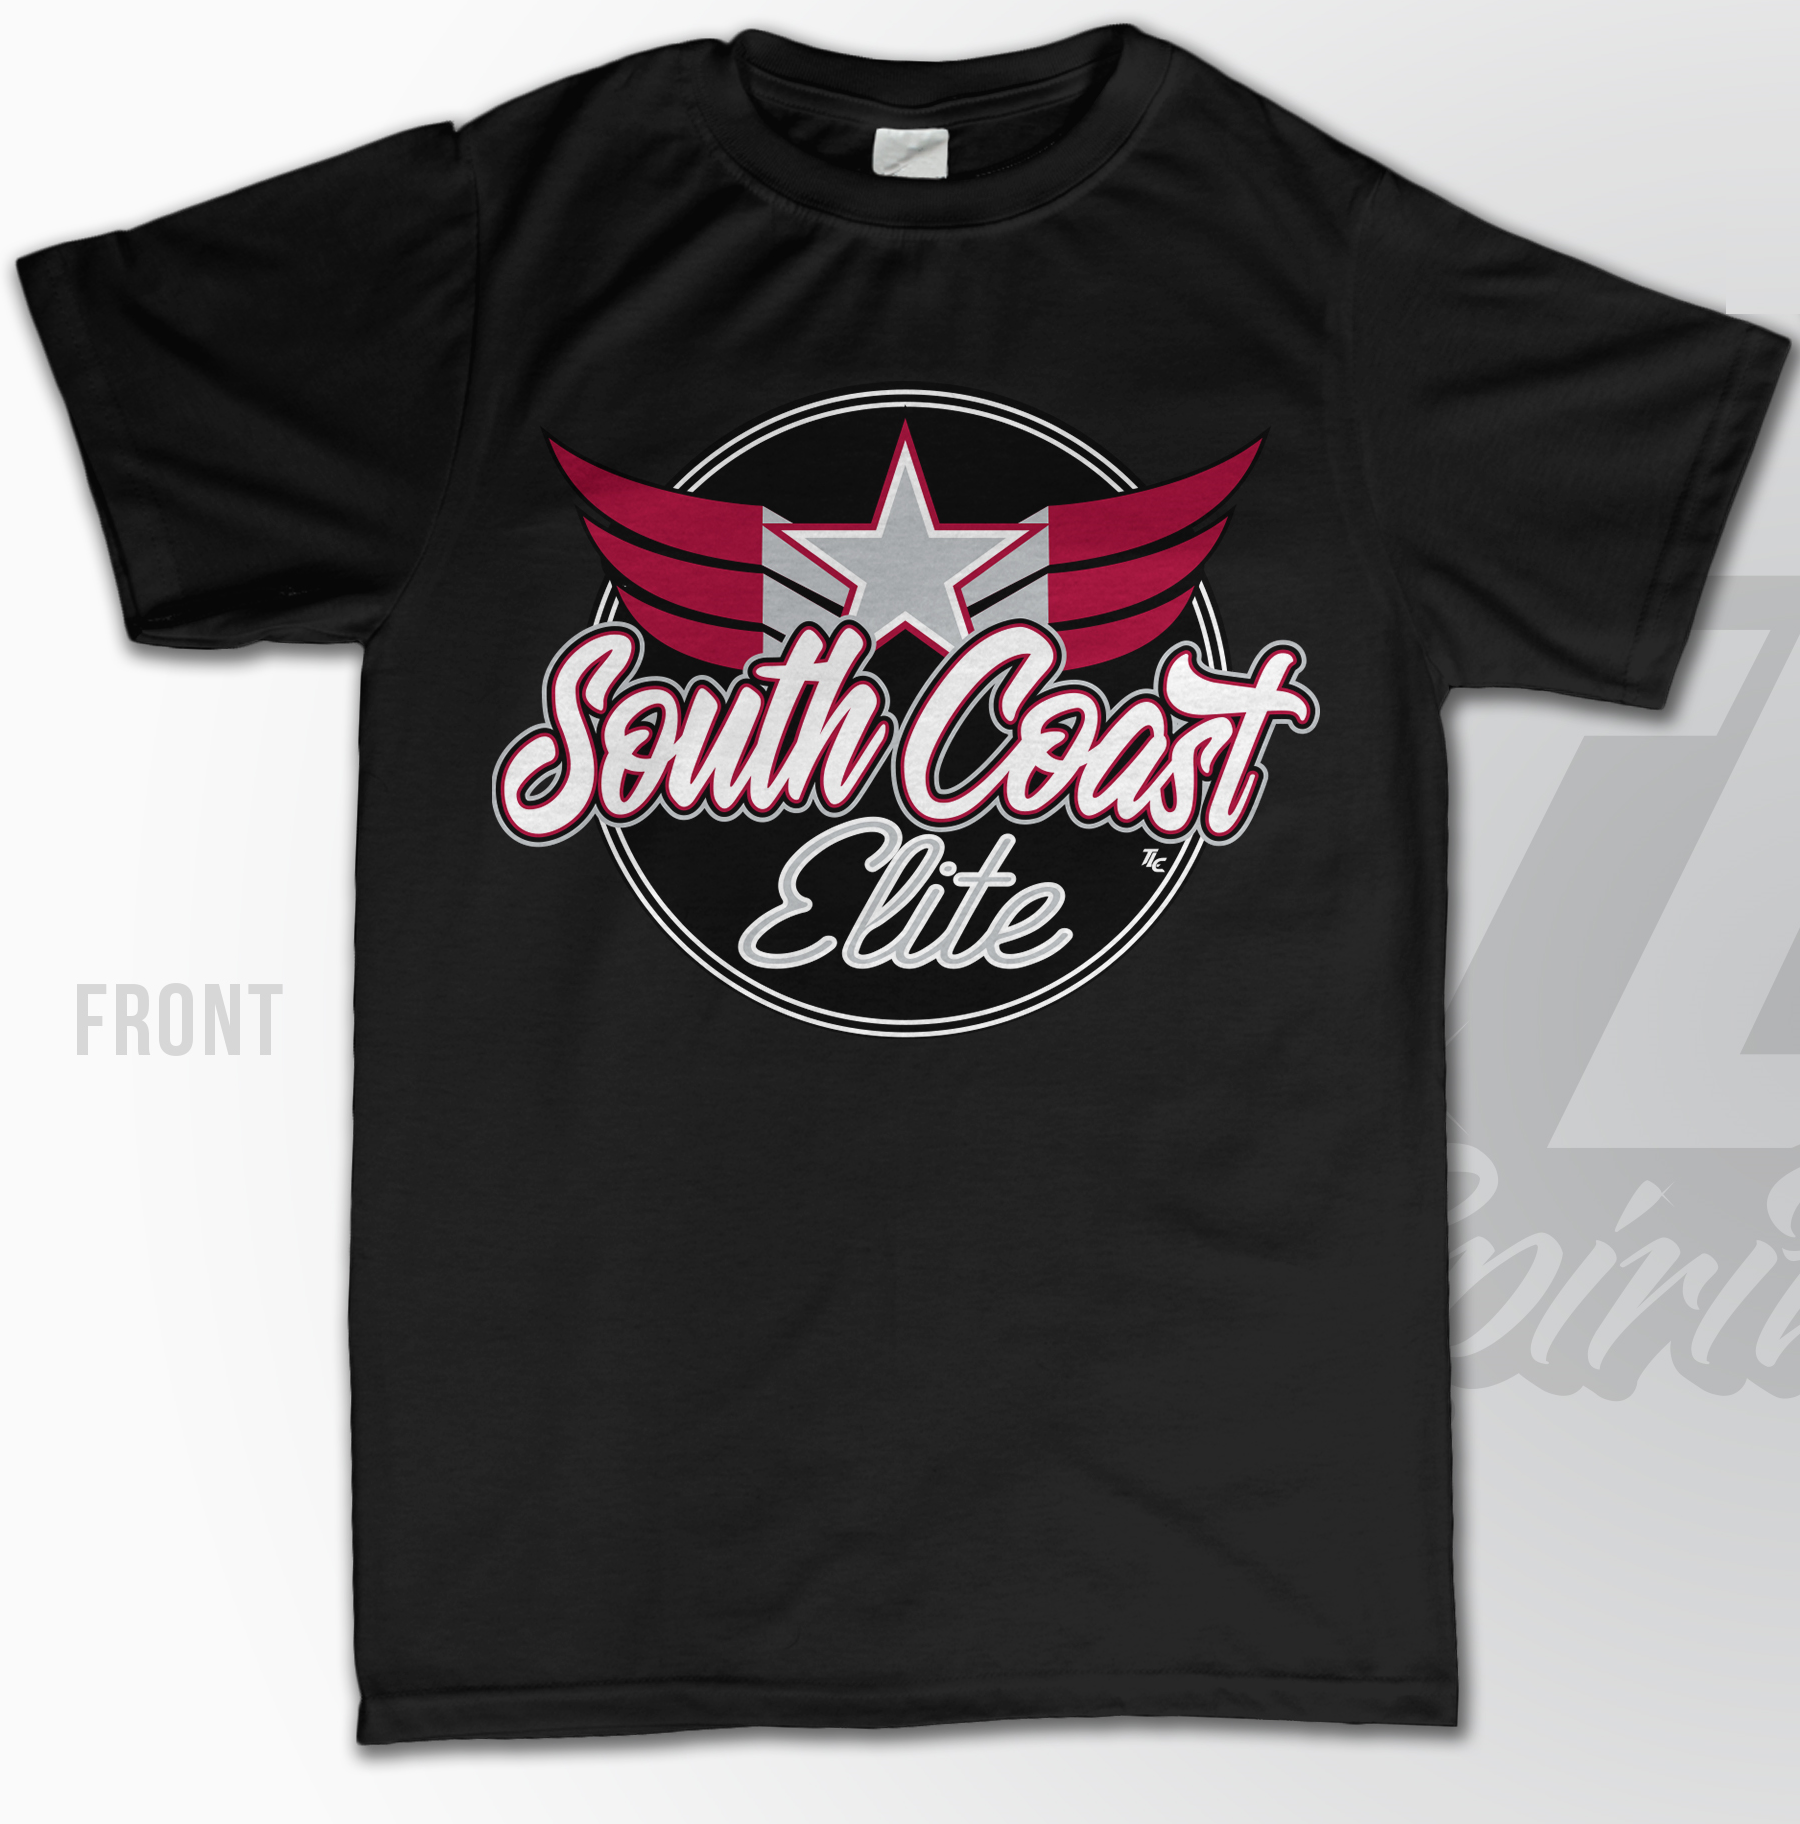 Custom T-Shirt – South Coast Elite